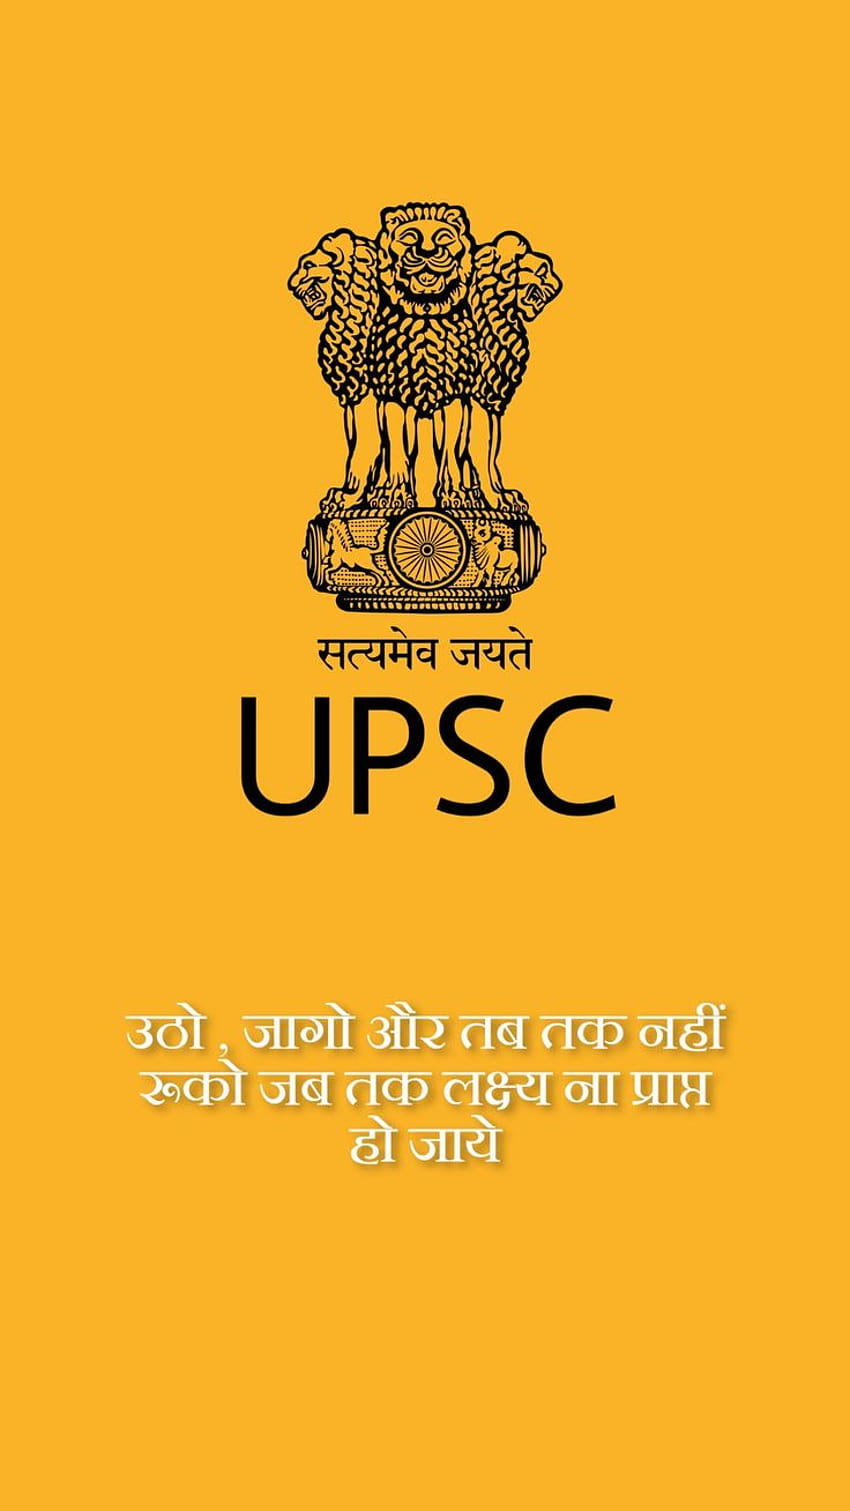 upsc logo HD phone wallpaper